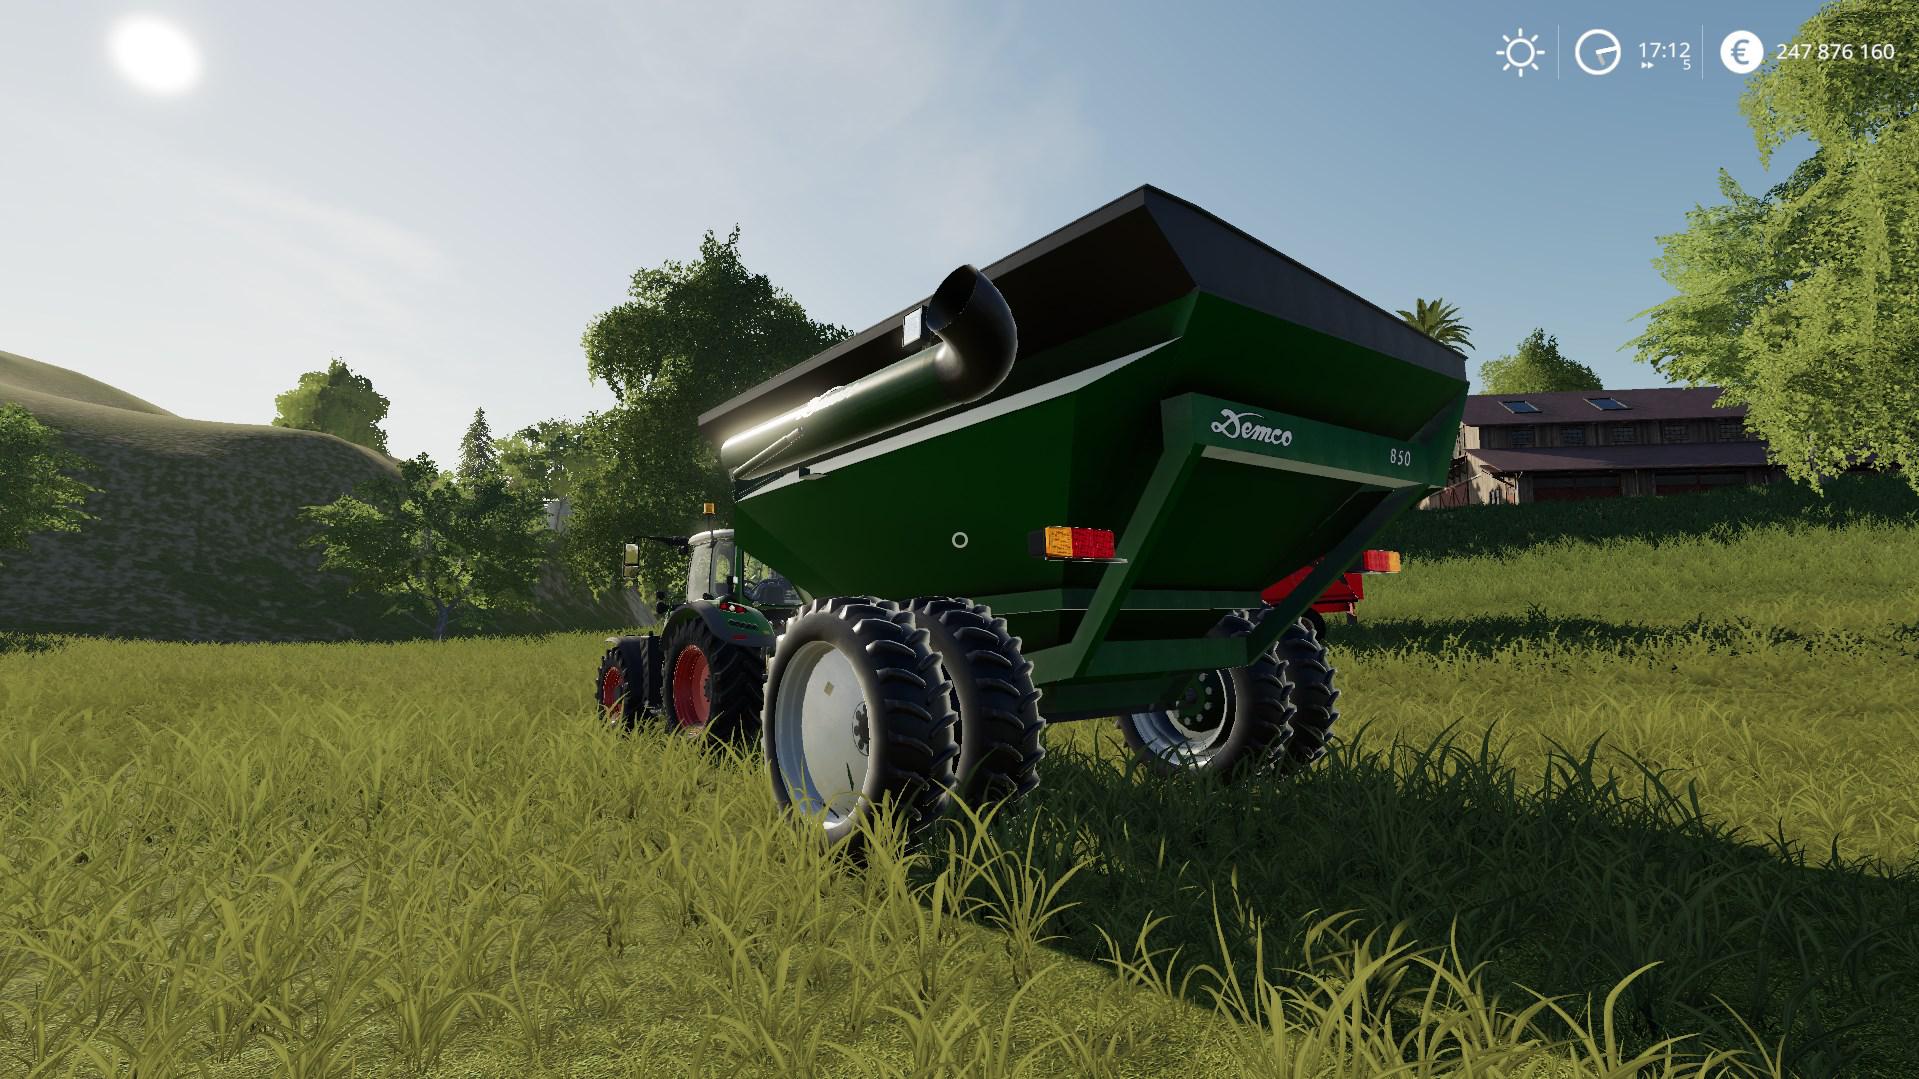 Demco 850 Grain Cart Screw Conveyor Trailer for Farming simulator 19 Price:...